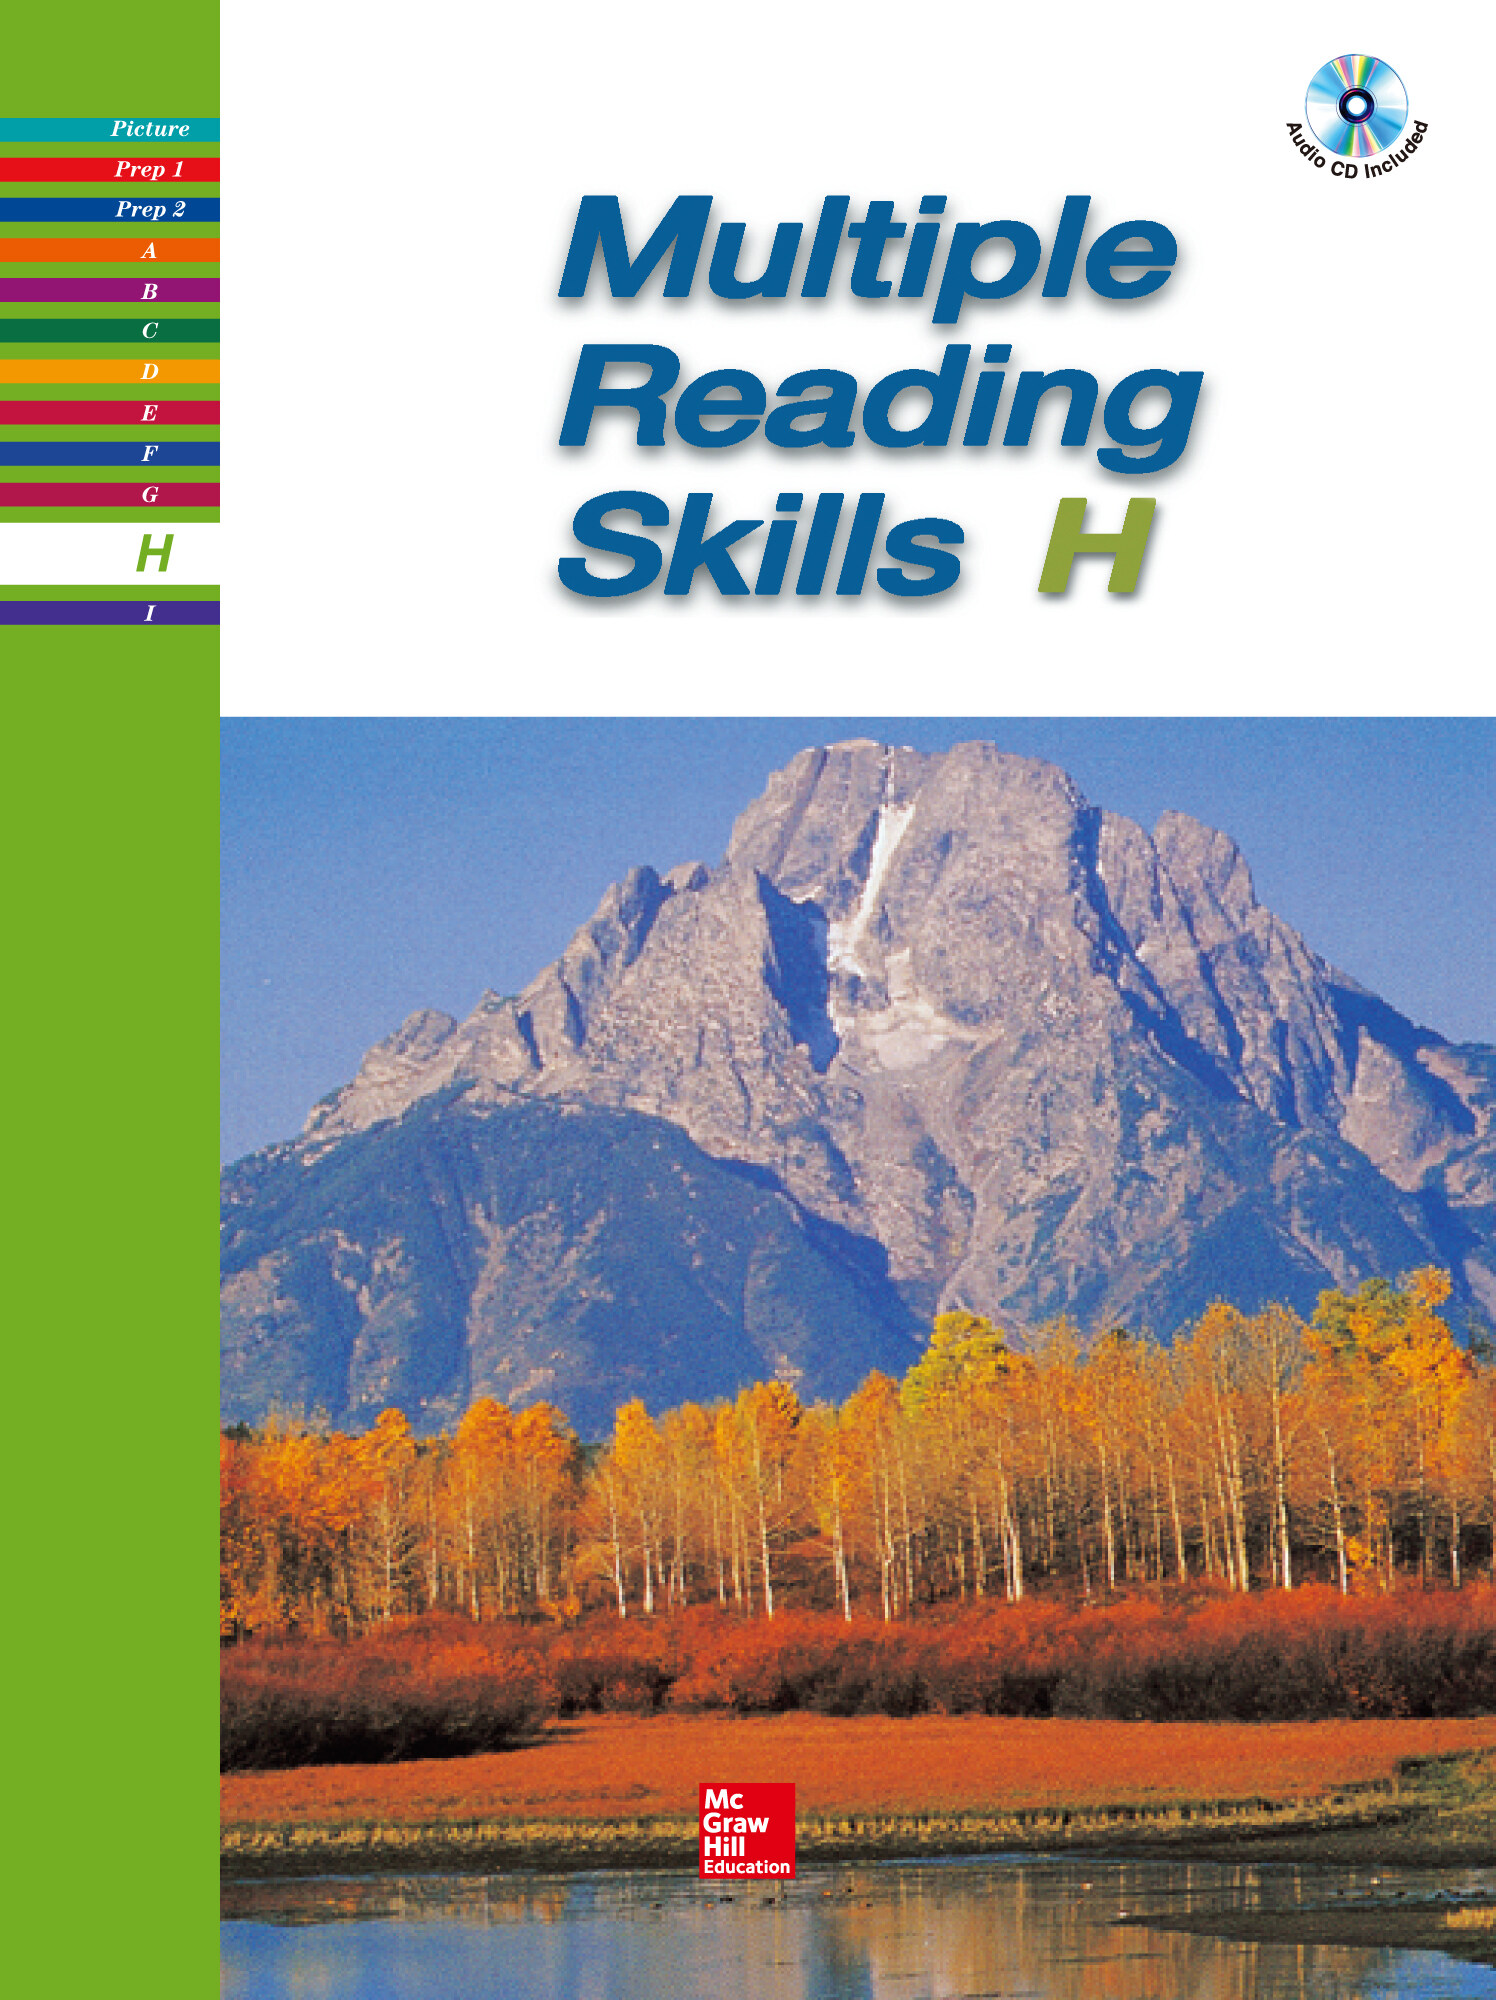 Multiple Reading Skills H (Paperback + QR)